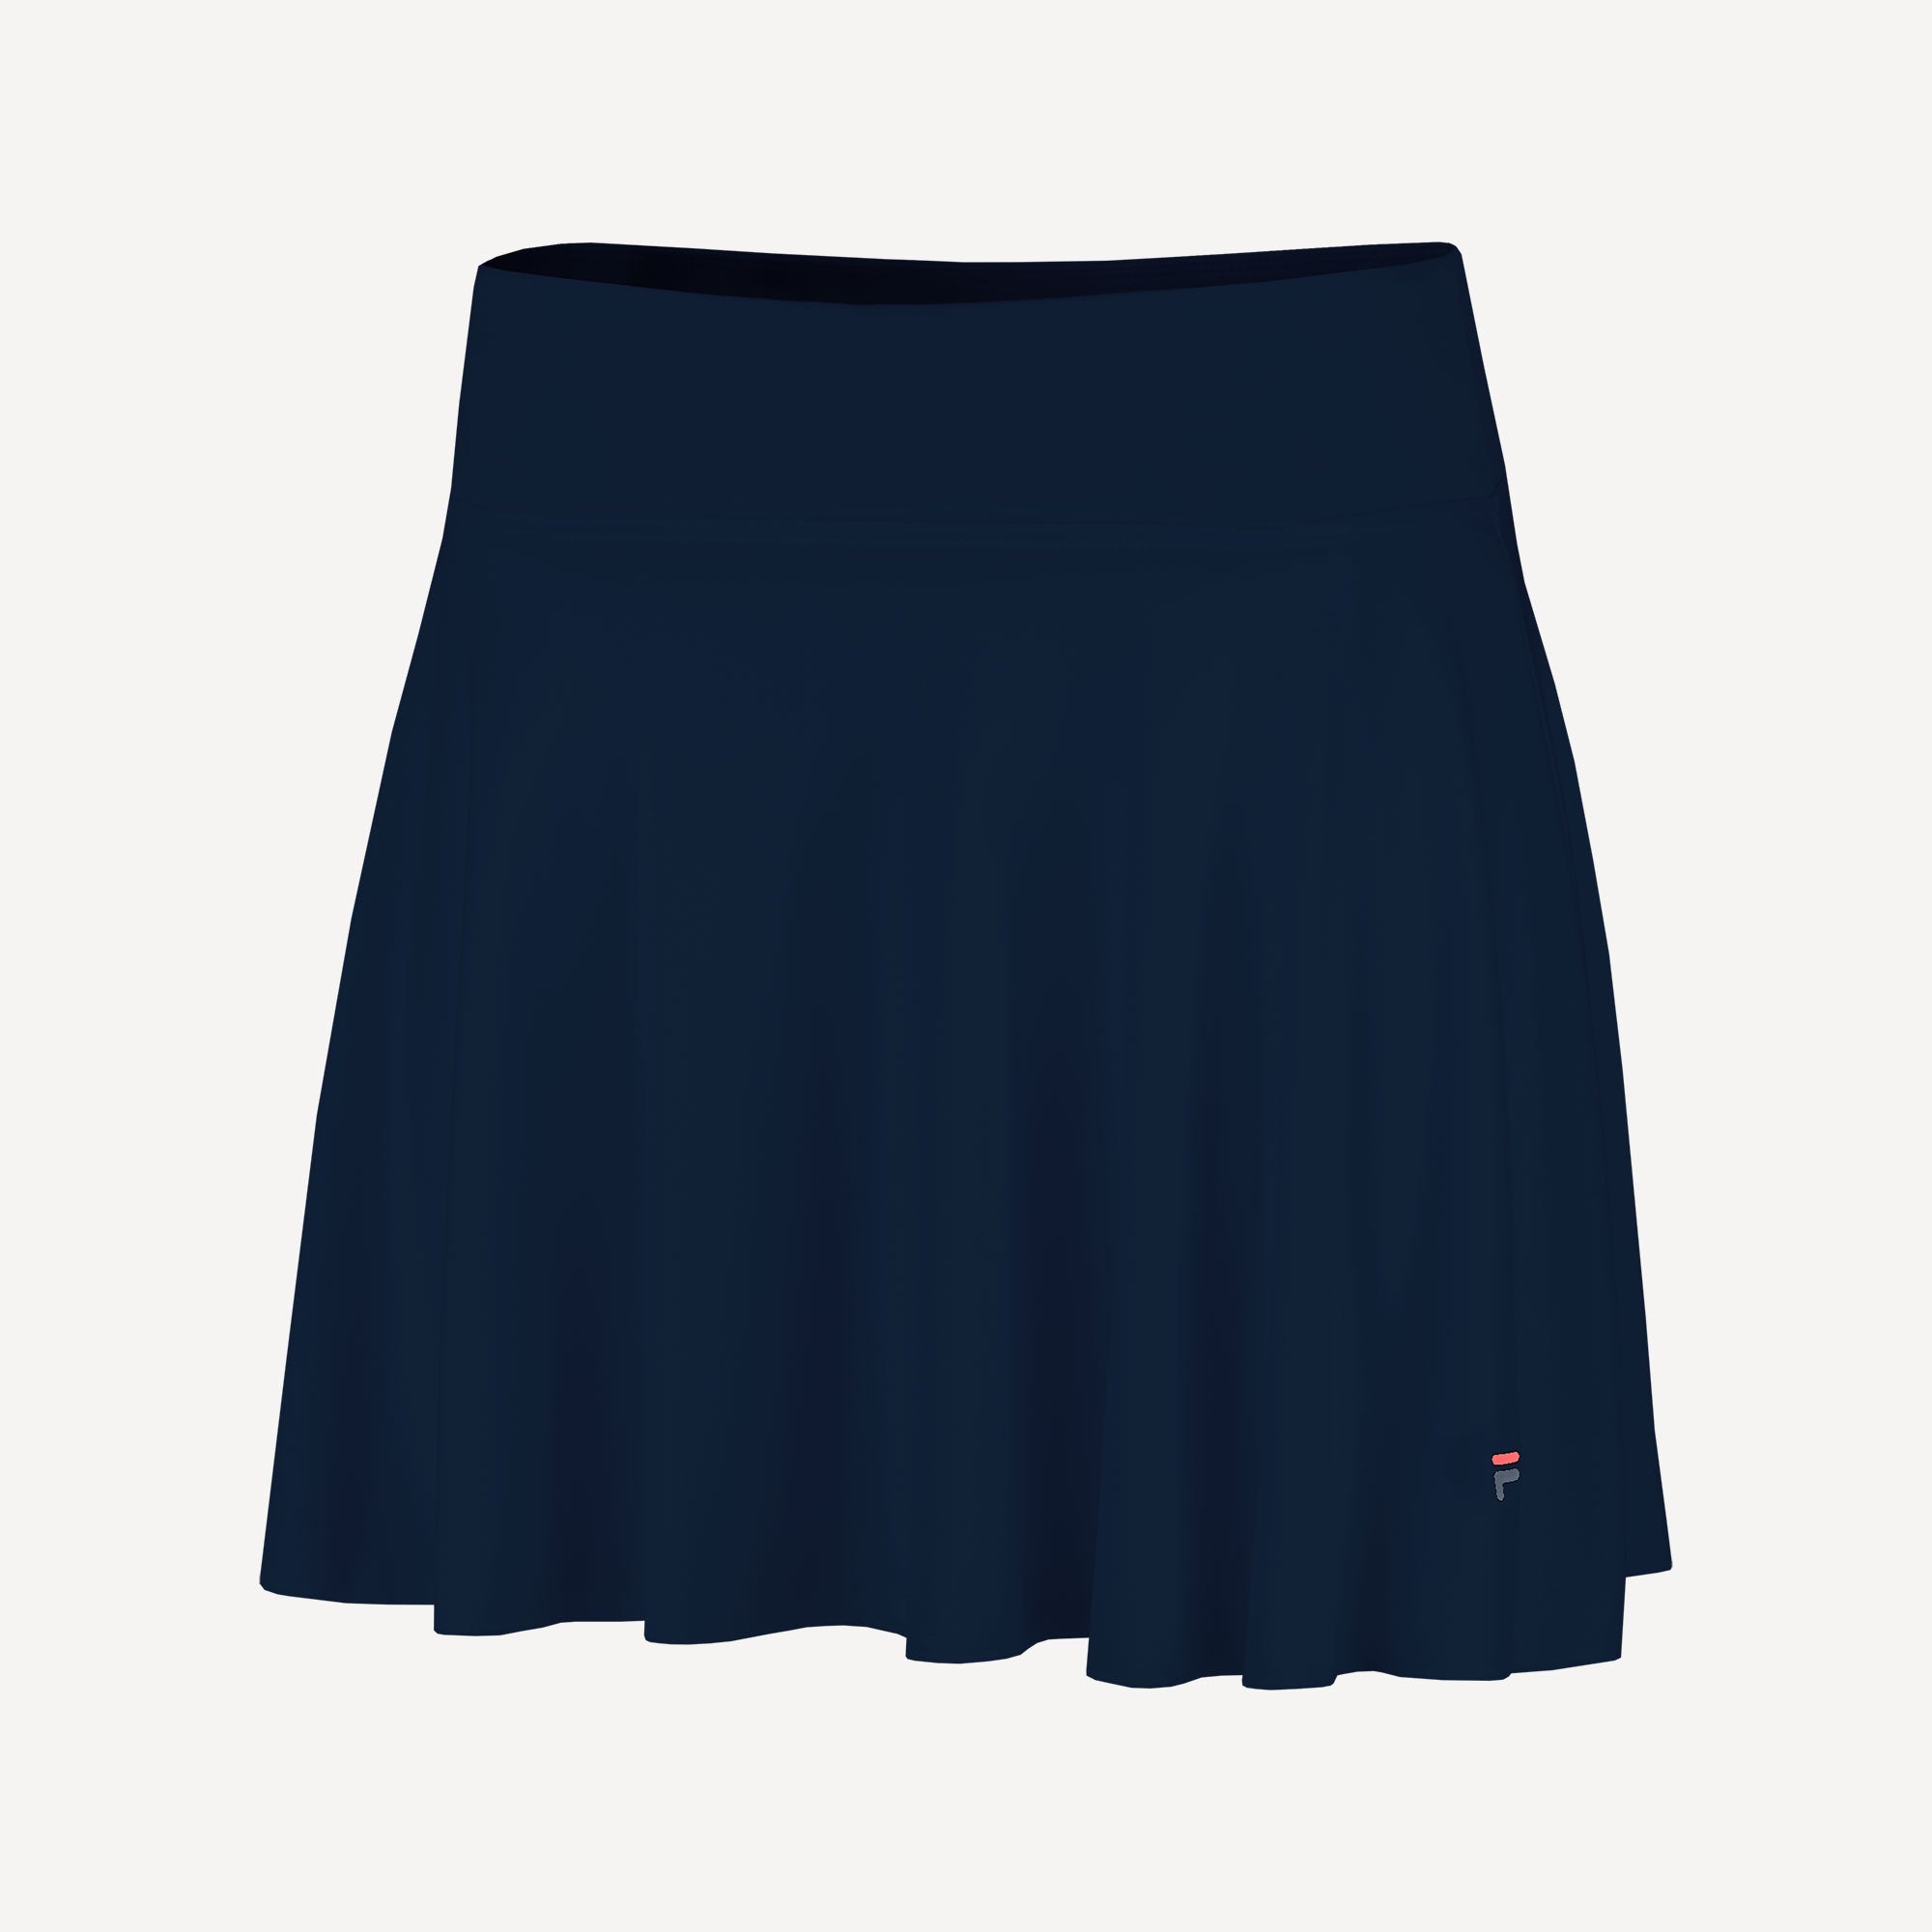 Fila Nicci Women's Tennis Skort - Dark Blue (1)